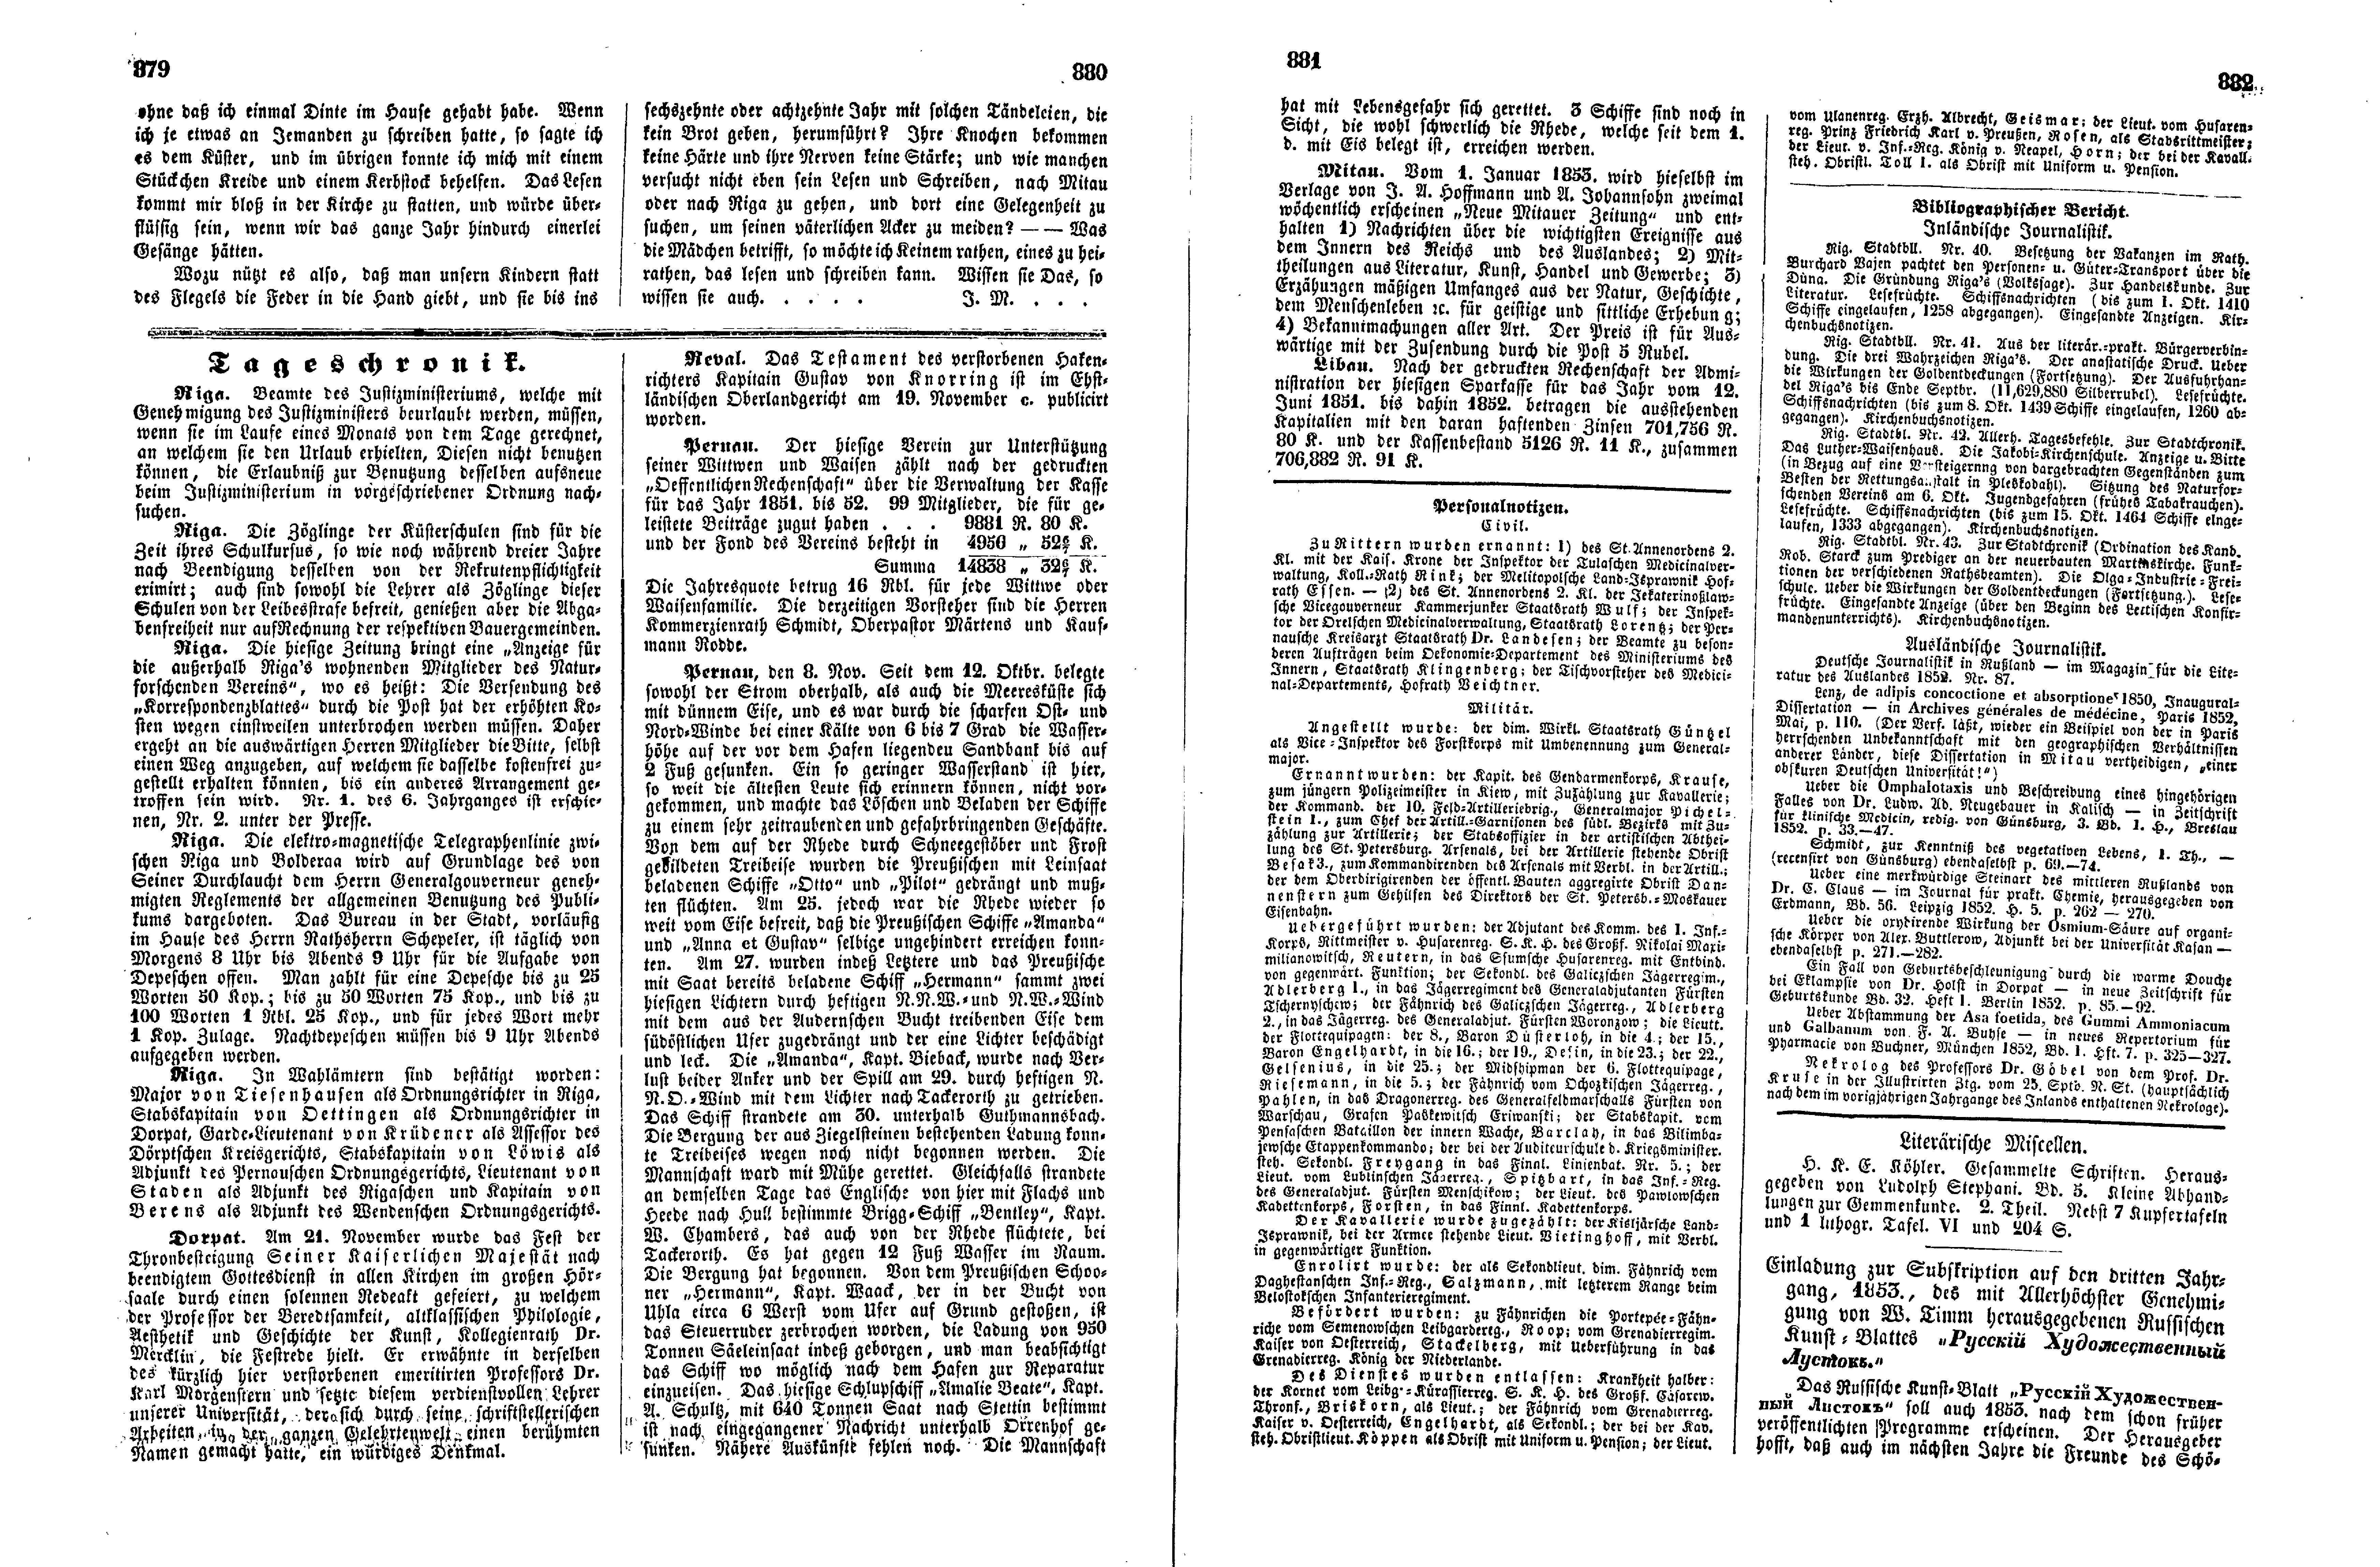 Das Inland [17] (1852) | 225. (879-882) Main body of text